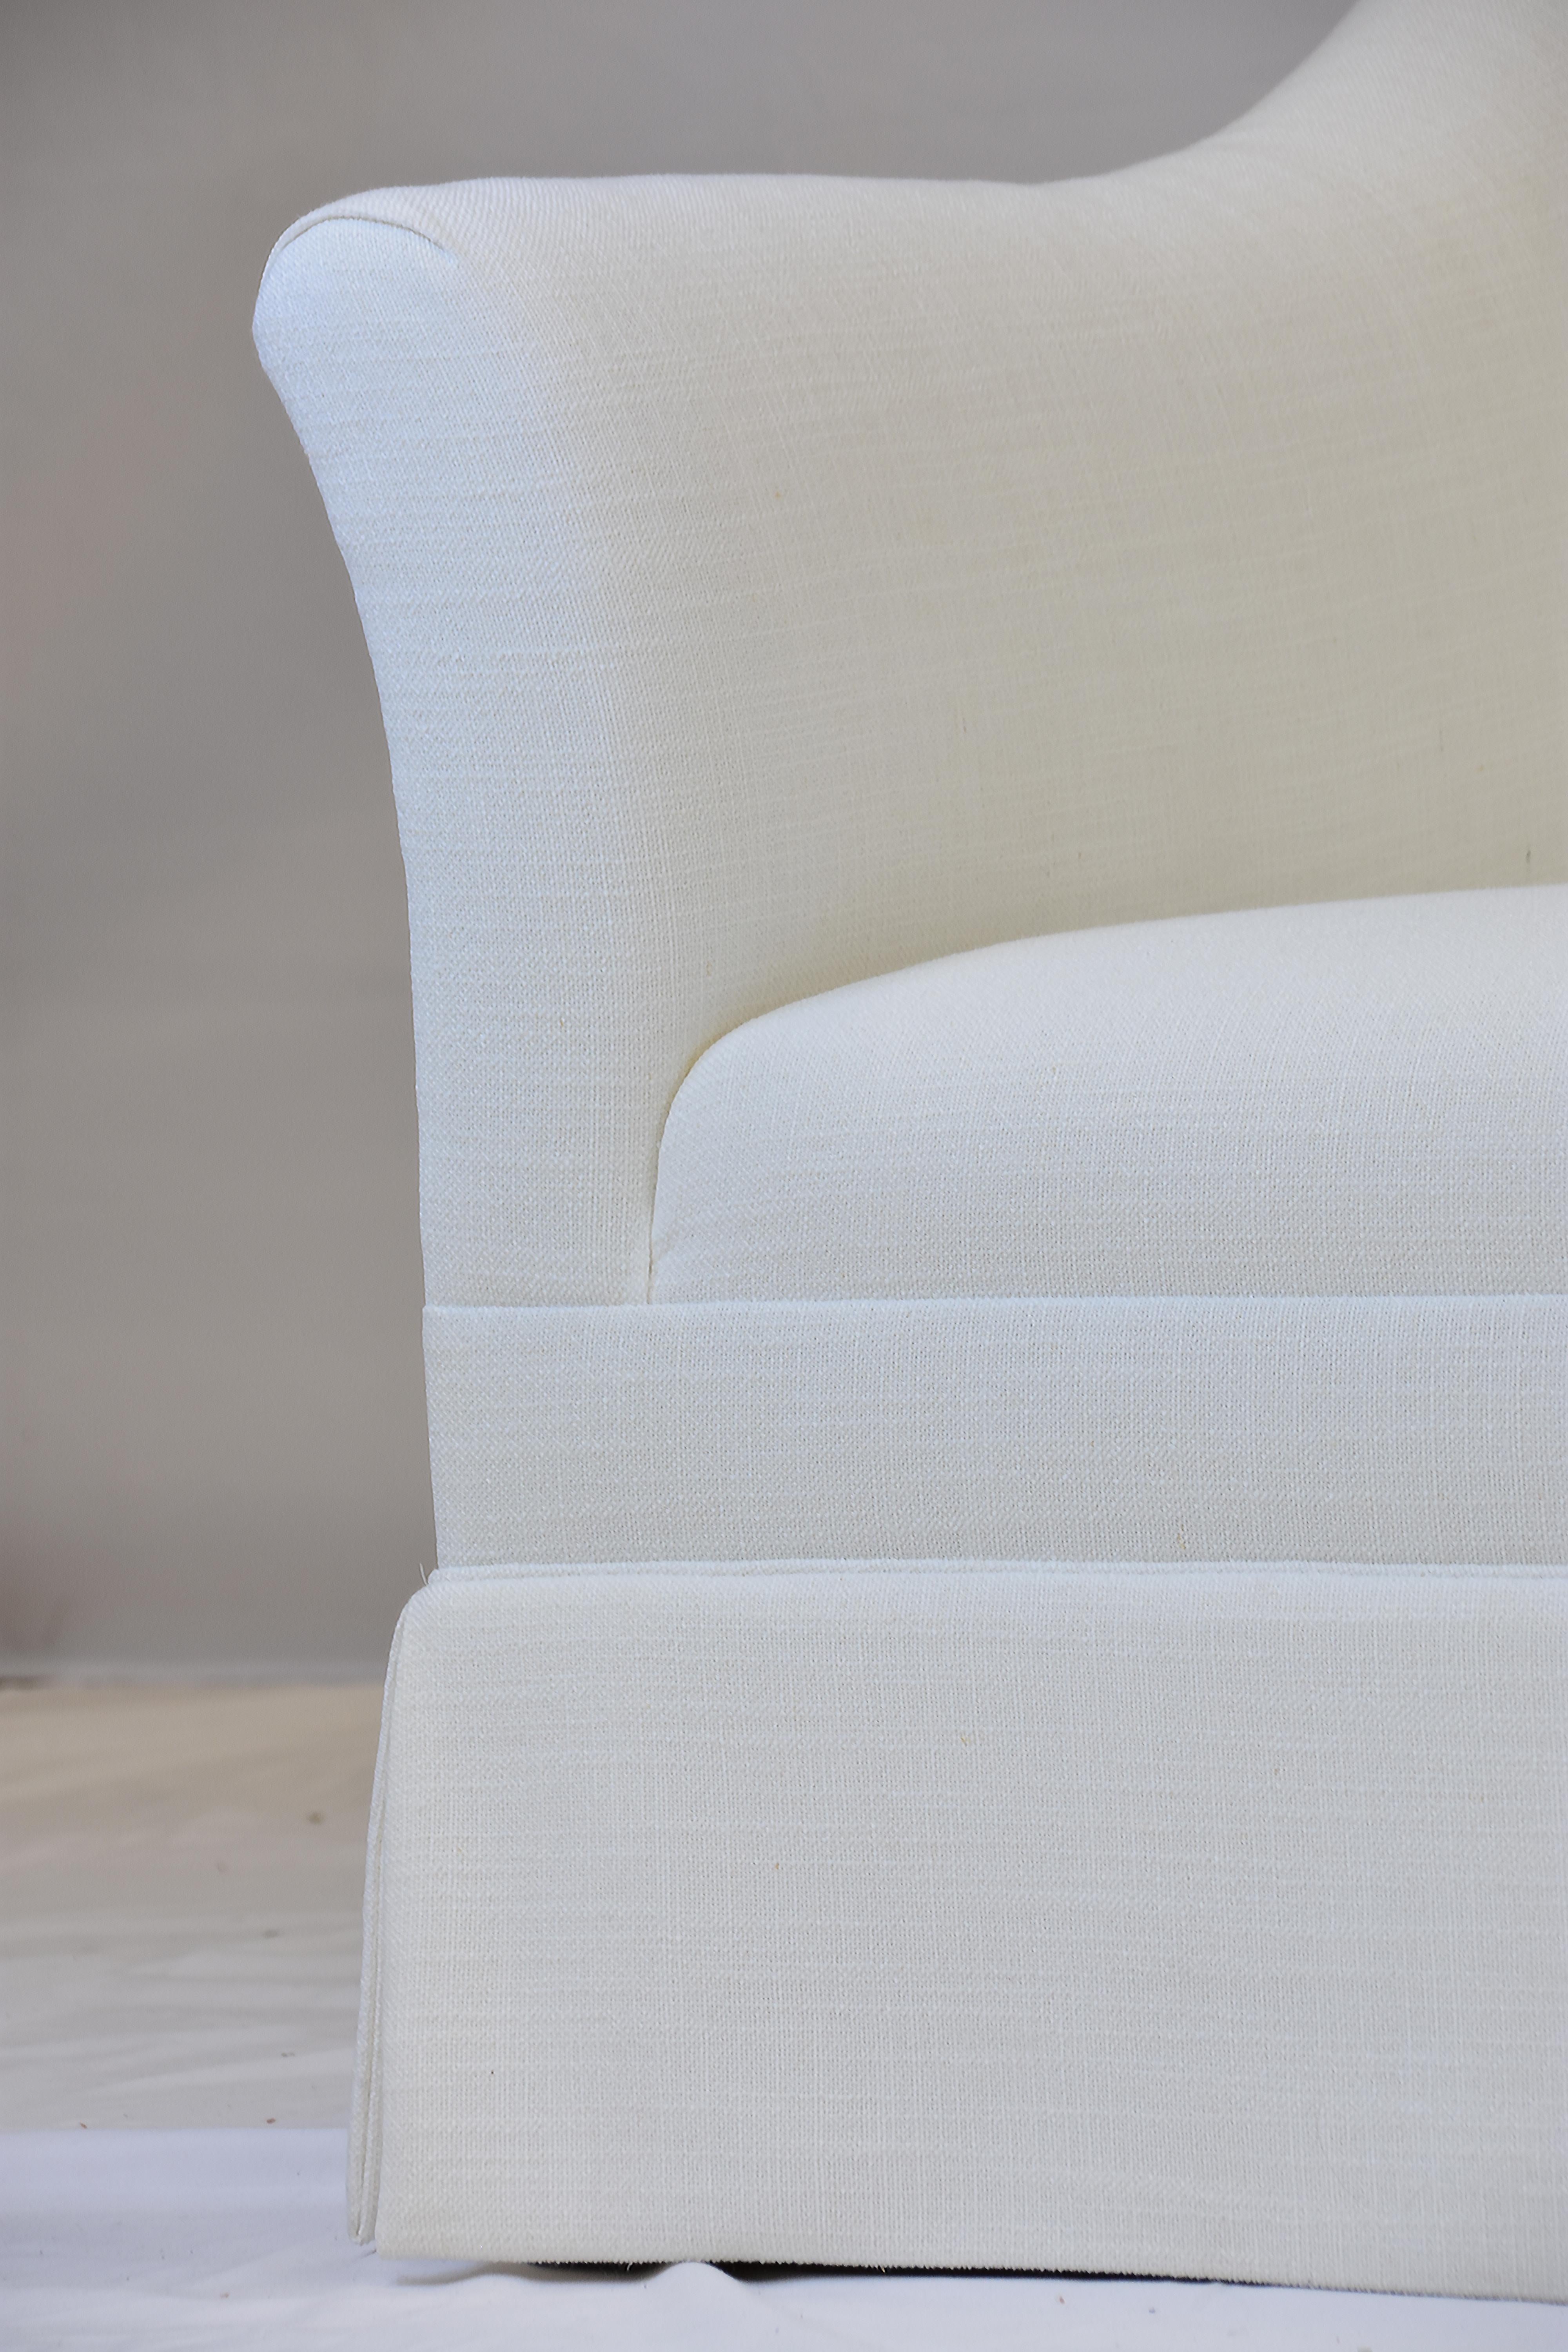 Le Jeune Upholstery Lucca Sofa Showroom Model in White Linen 4